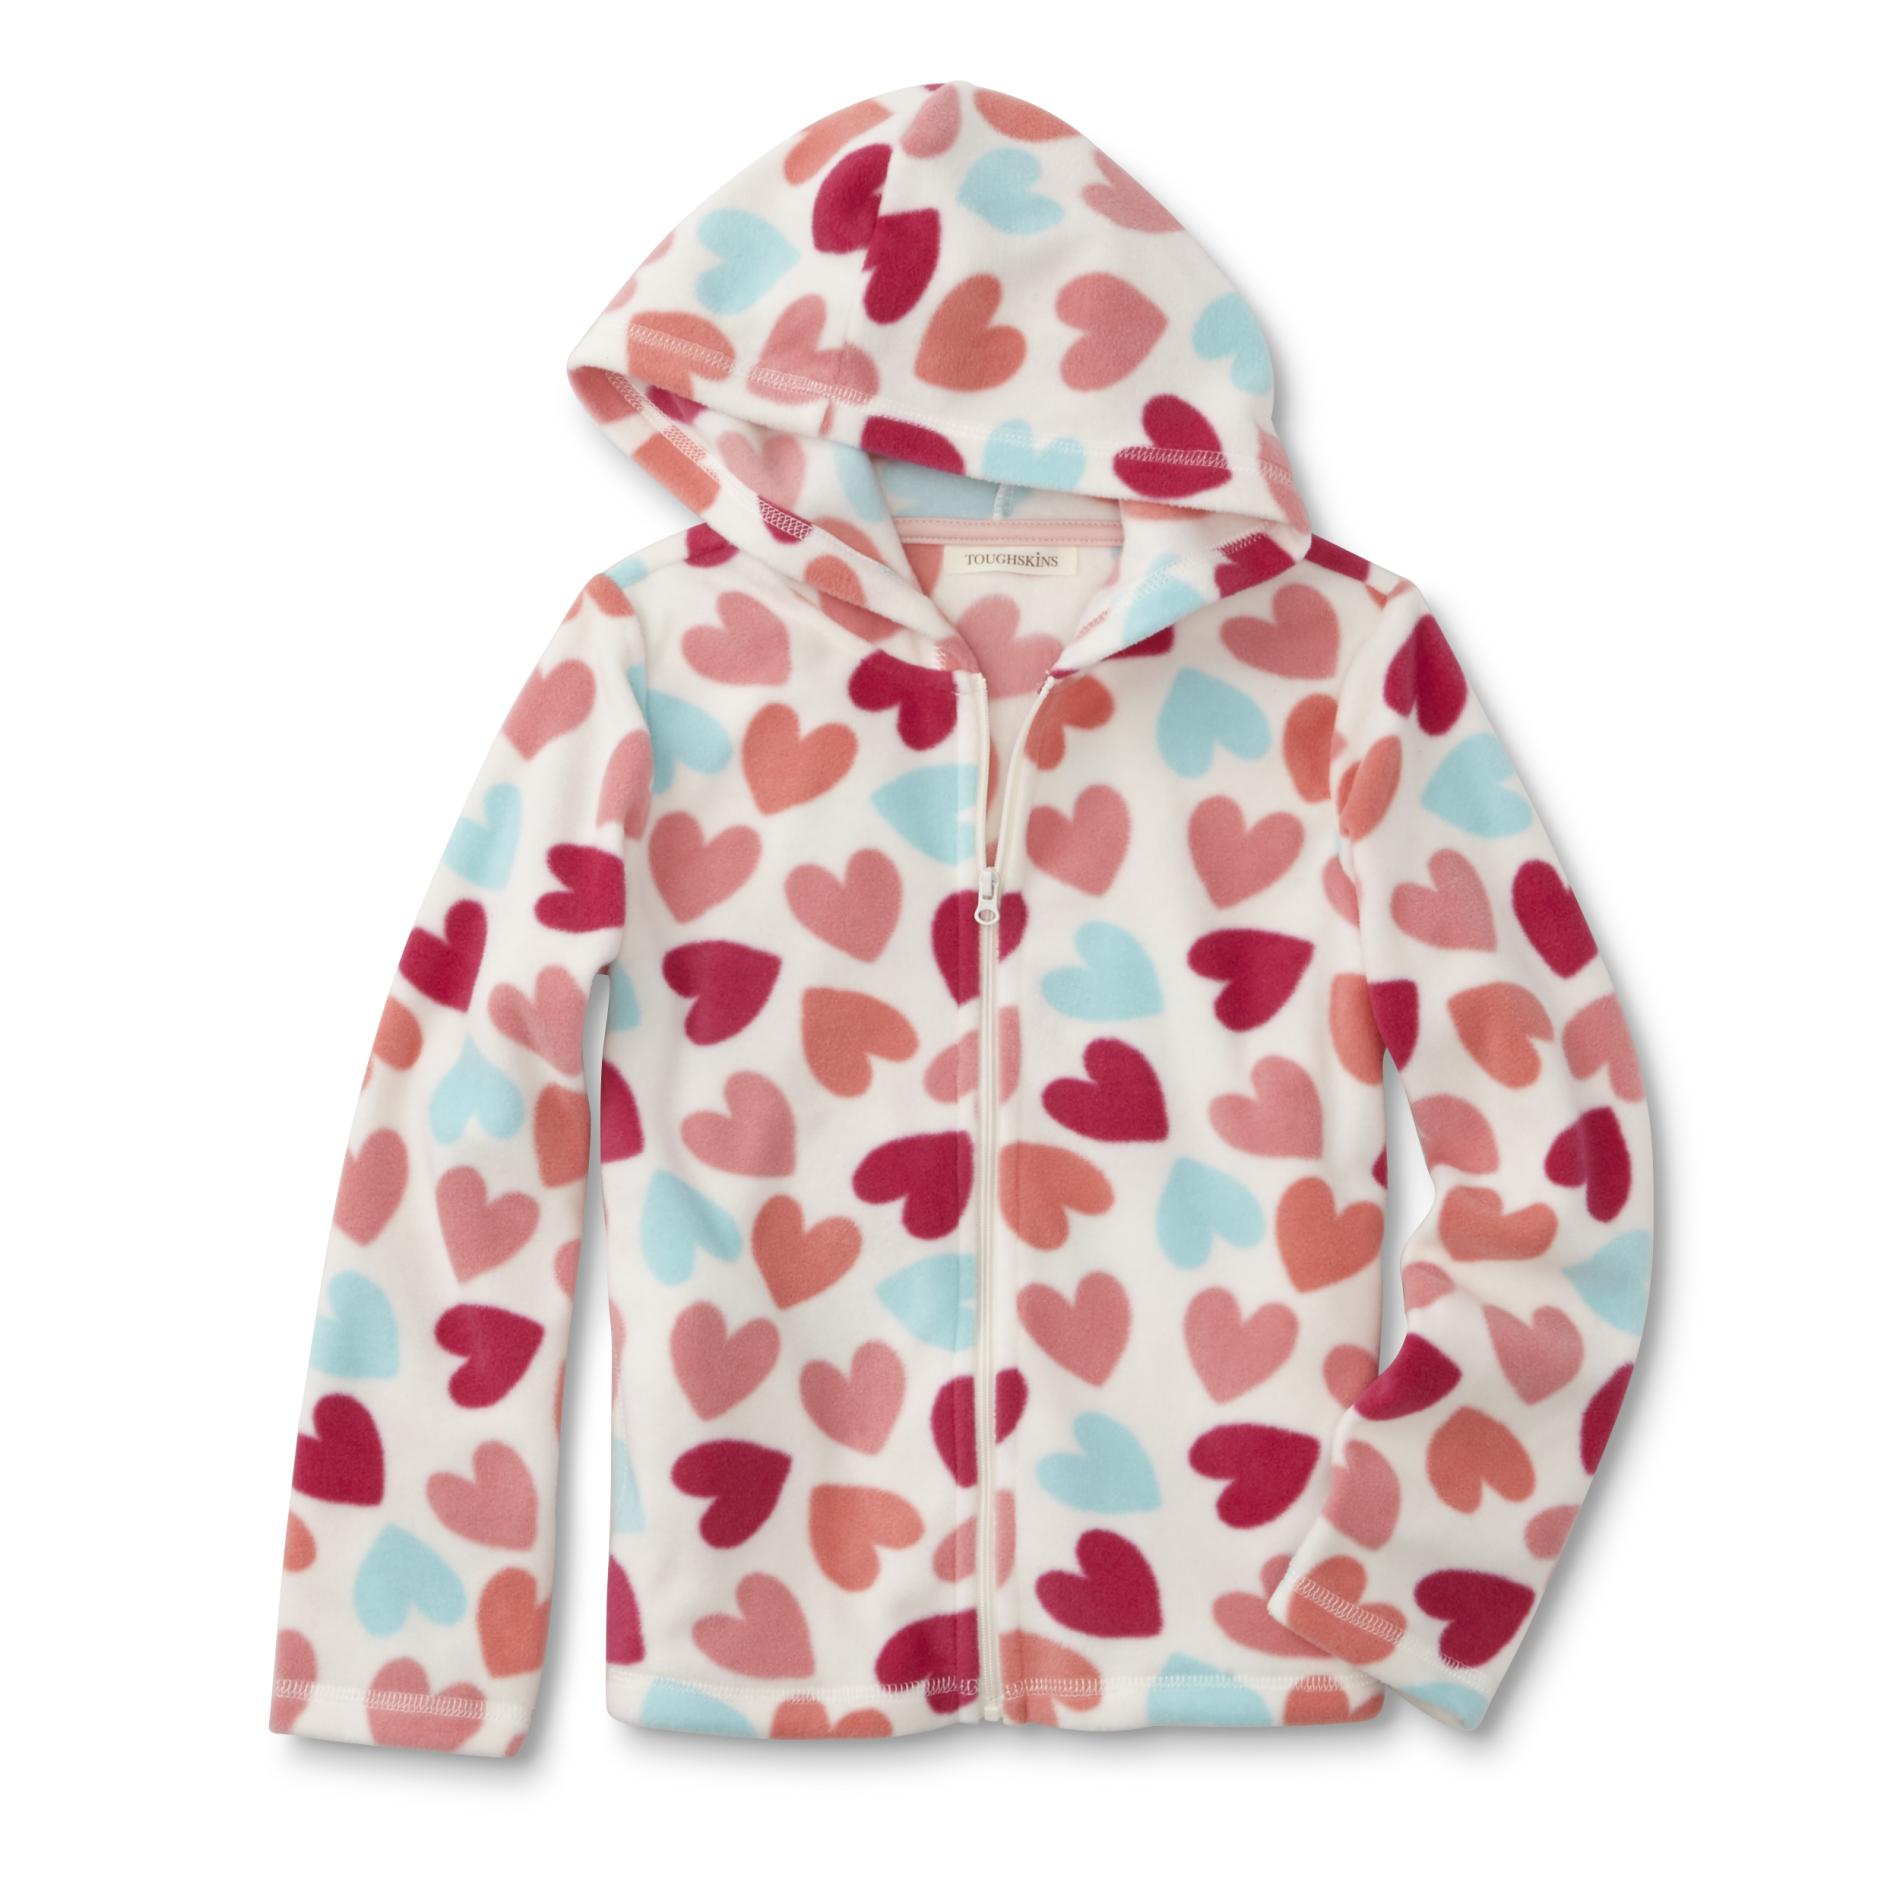 Toughskins Infant & Toddler Girls' Fleece Hoodie Jacket - Hearts